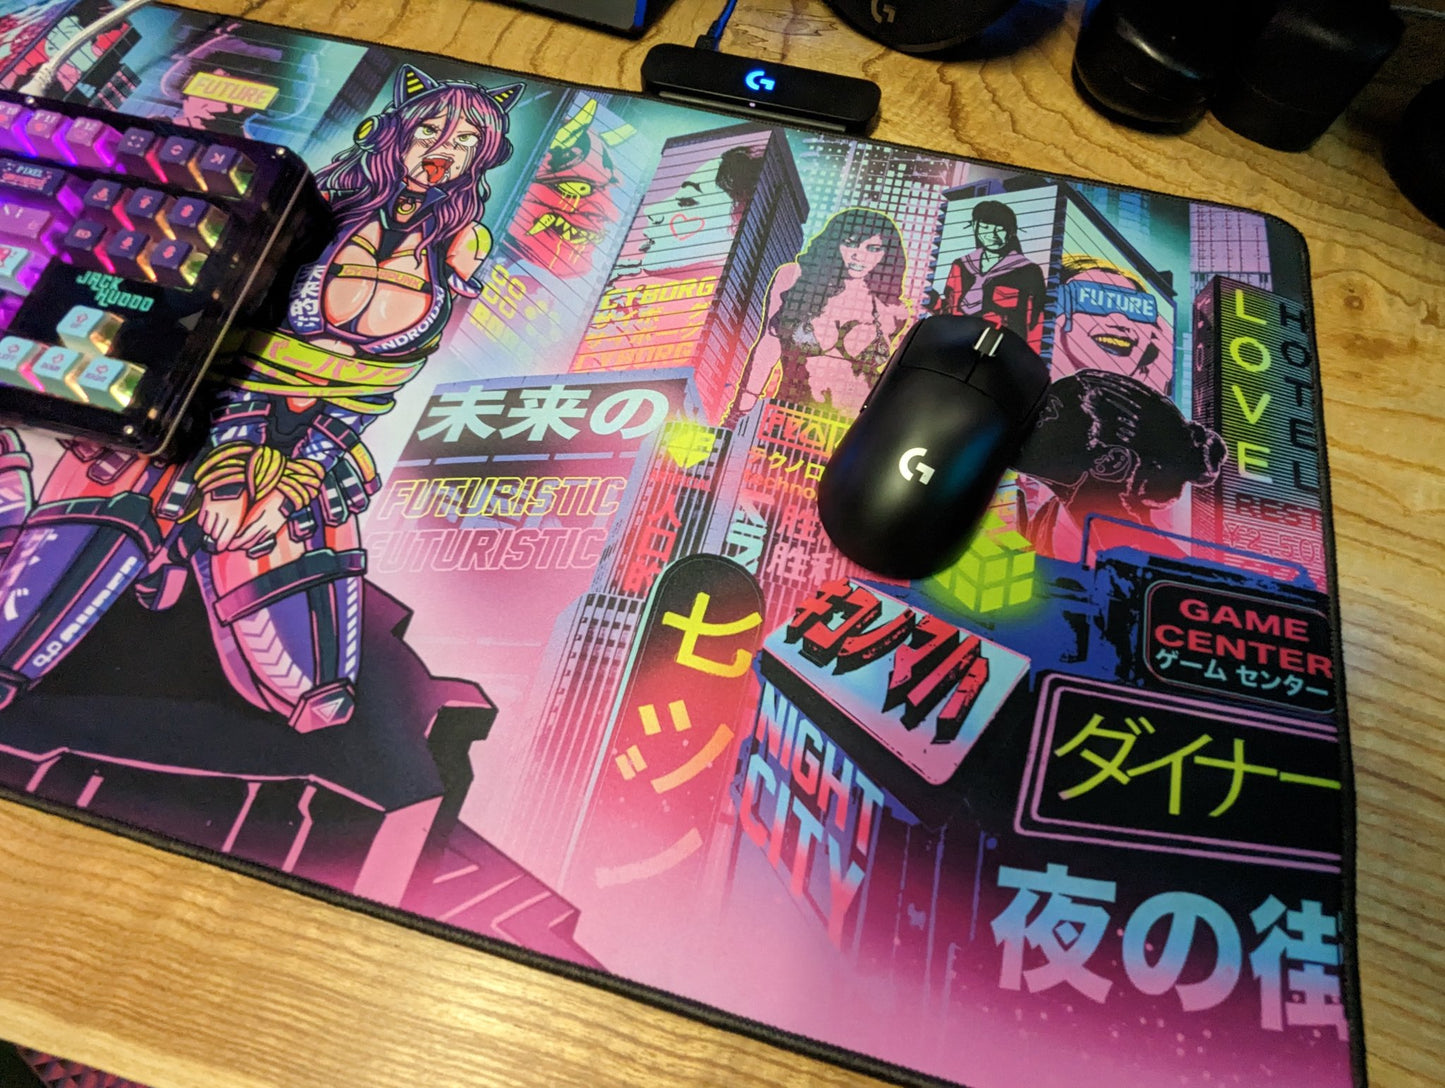 Tied Up Anime Girl Cyberpunk Design Mousepad Deskmat